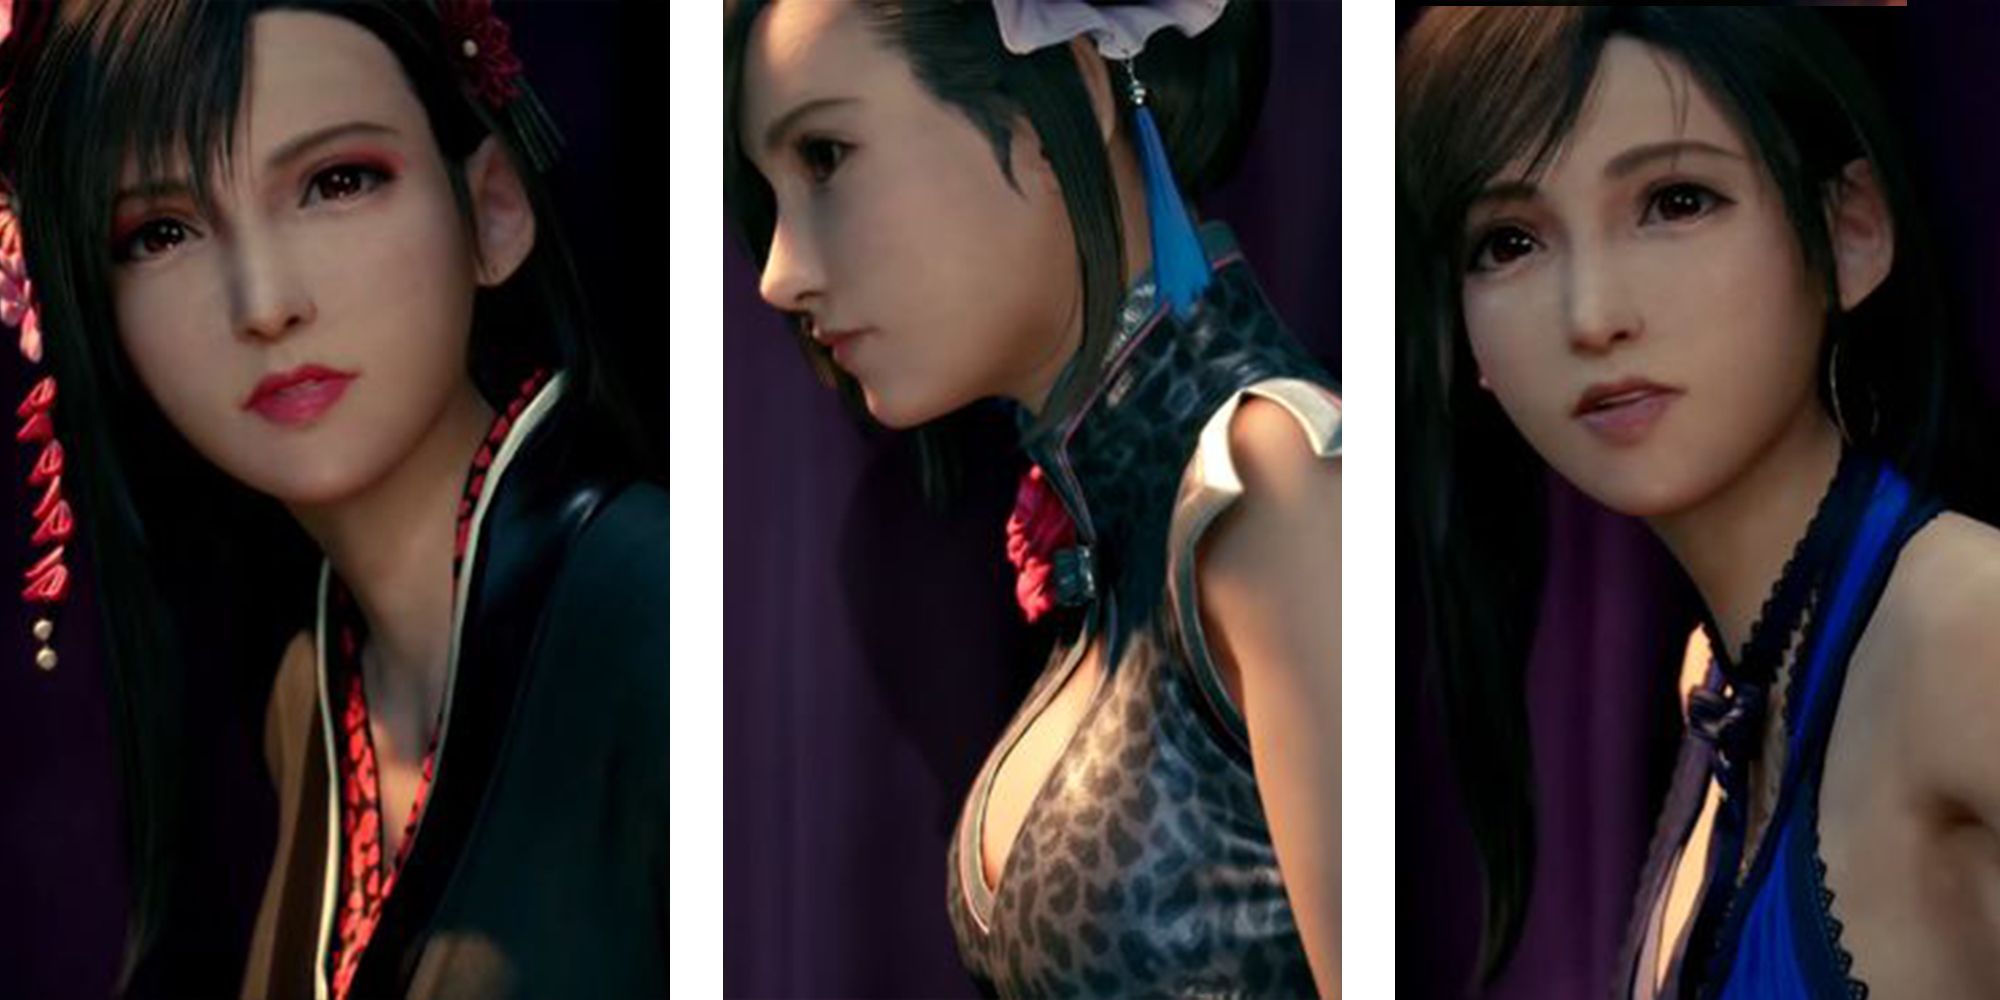 Final fantasy vii remake includes mechanics for dresses that alter the dres...